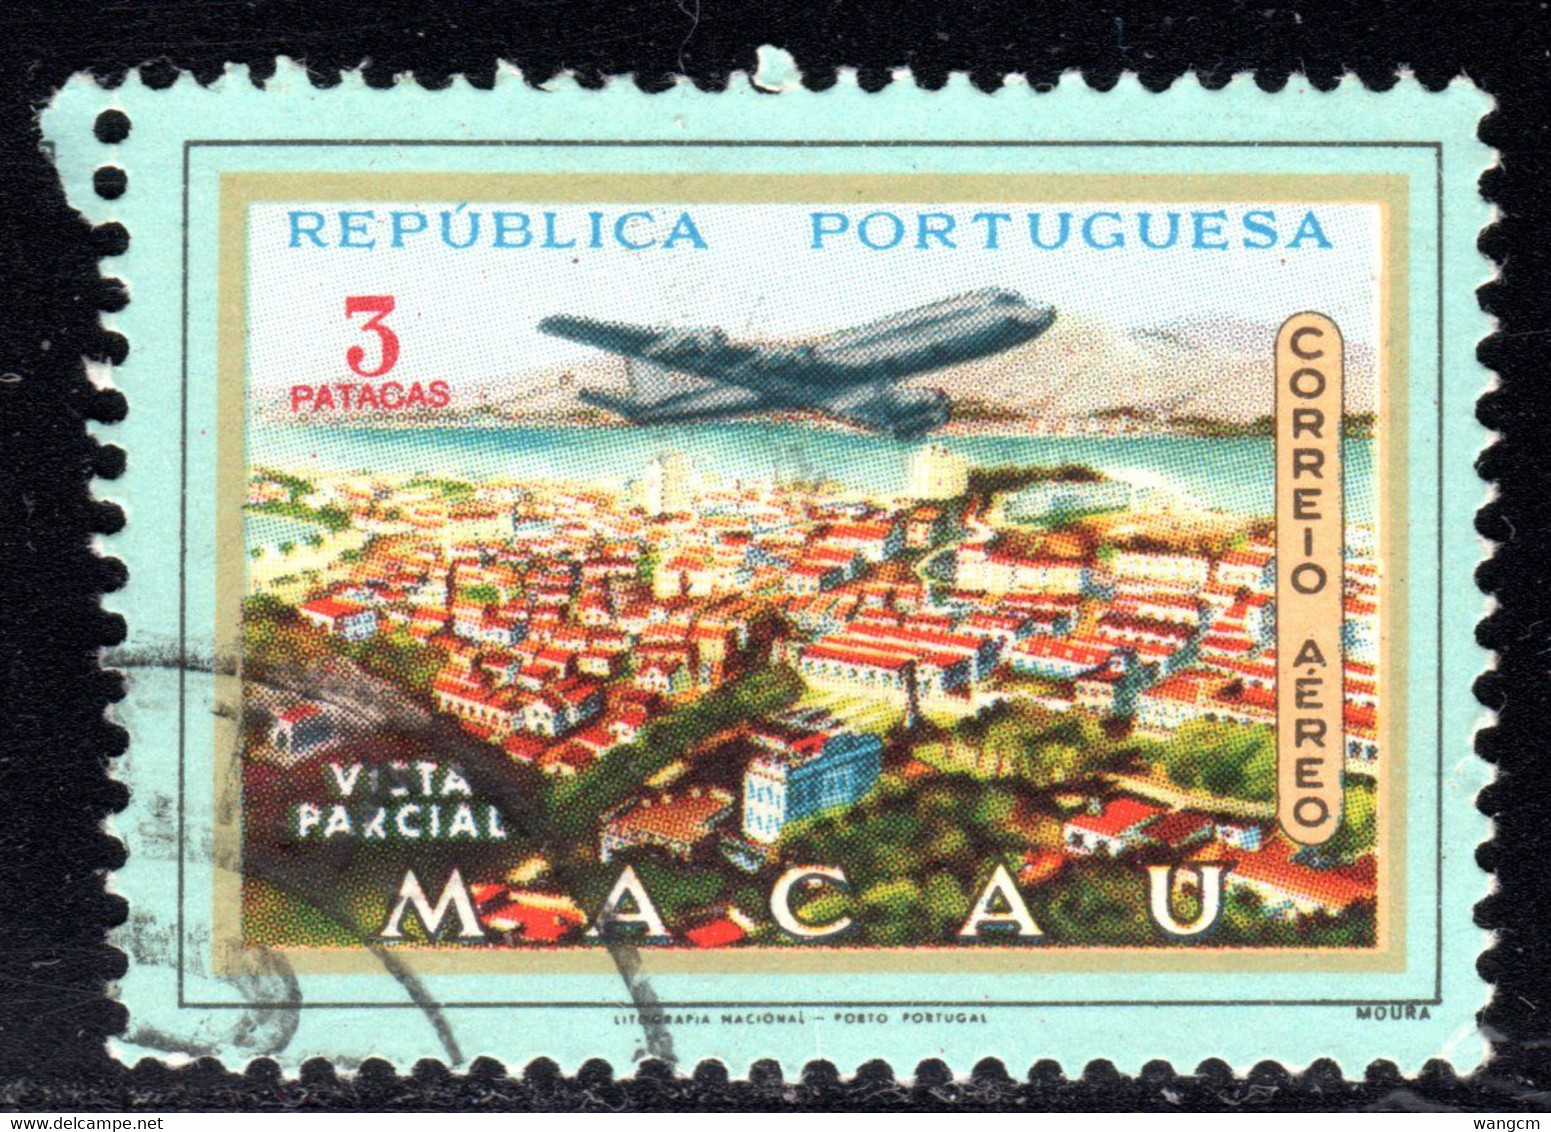 Macau 1960 3p Air Issue SG483 Scott#C18 Fine Used - Gebruikt